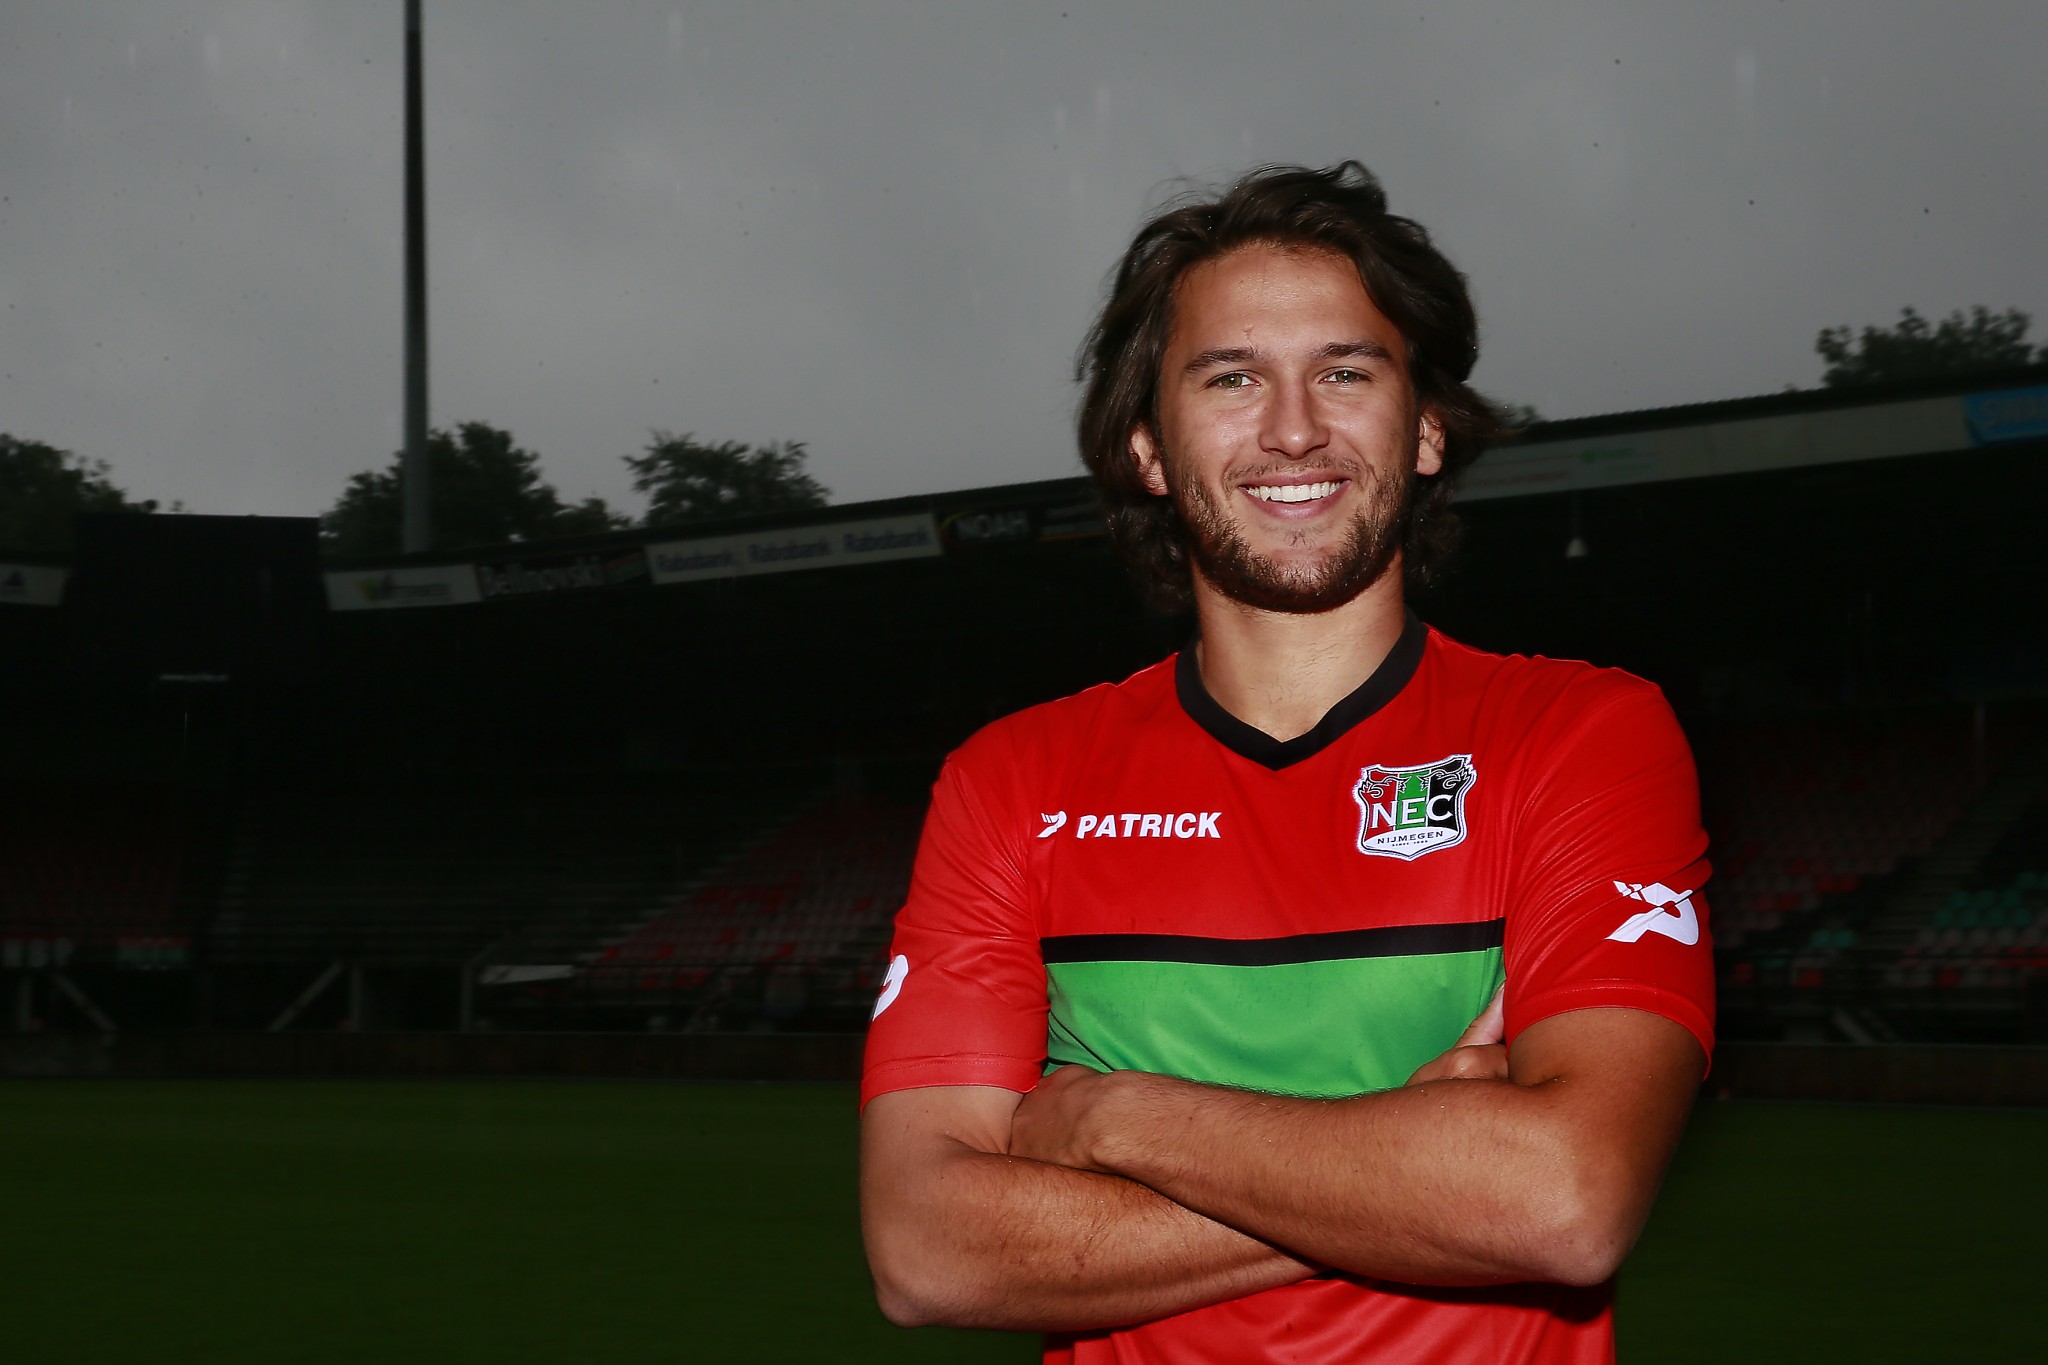 N.E.C. neemt Julian von Haacke over van Werder Bremen